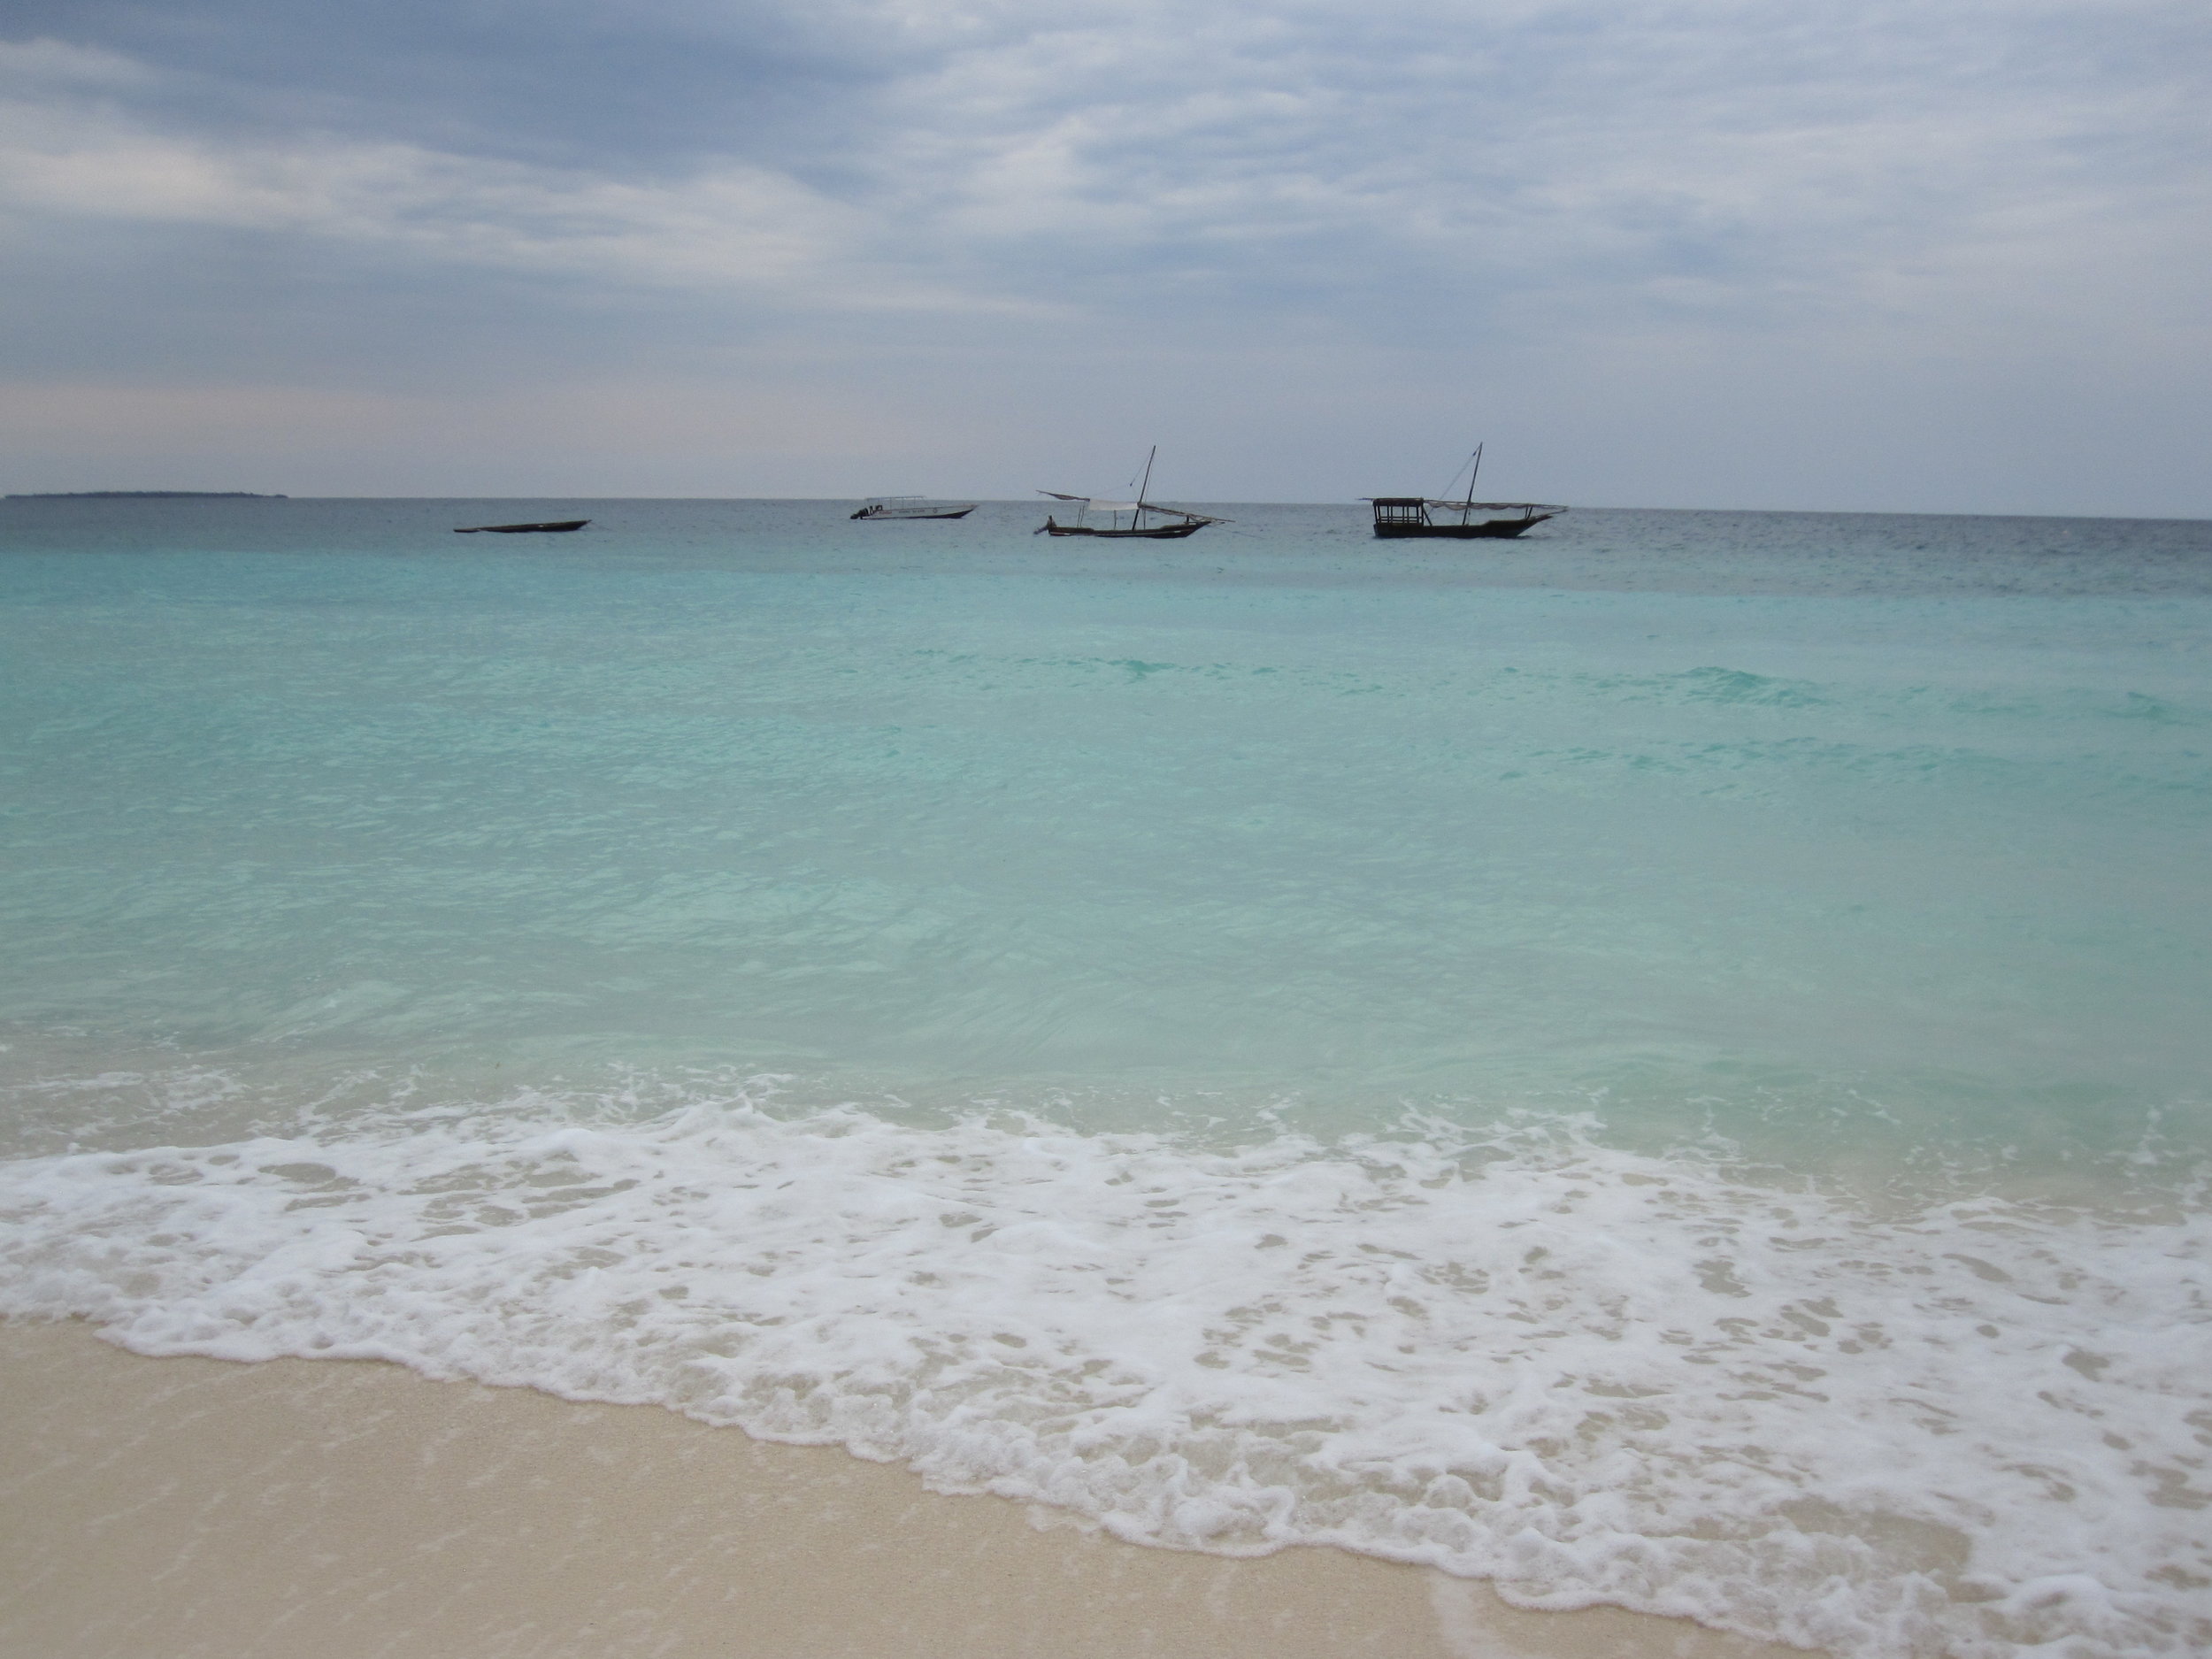 Dhows in the water in Zanzibar